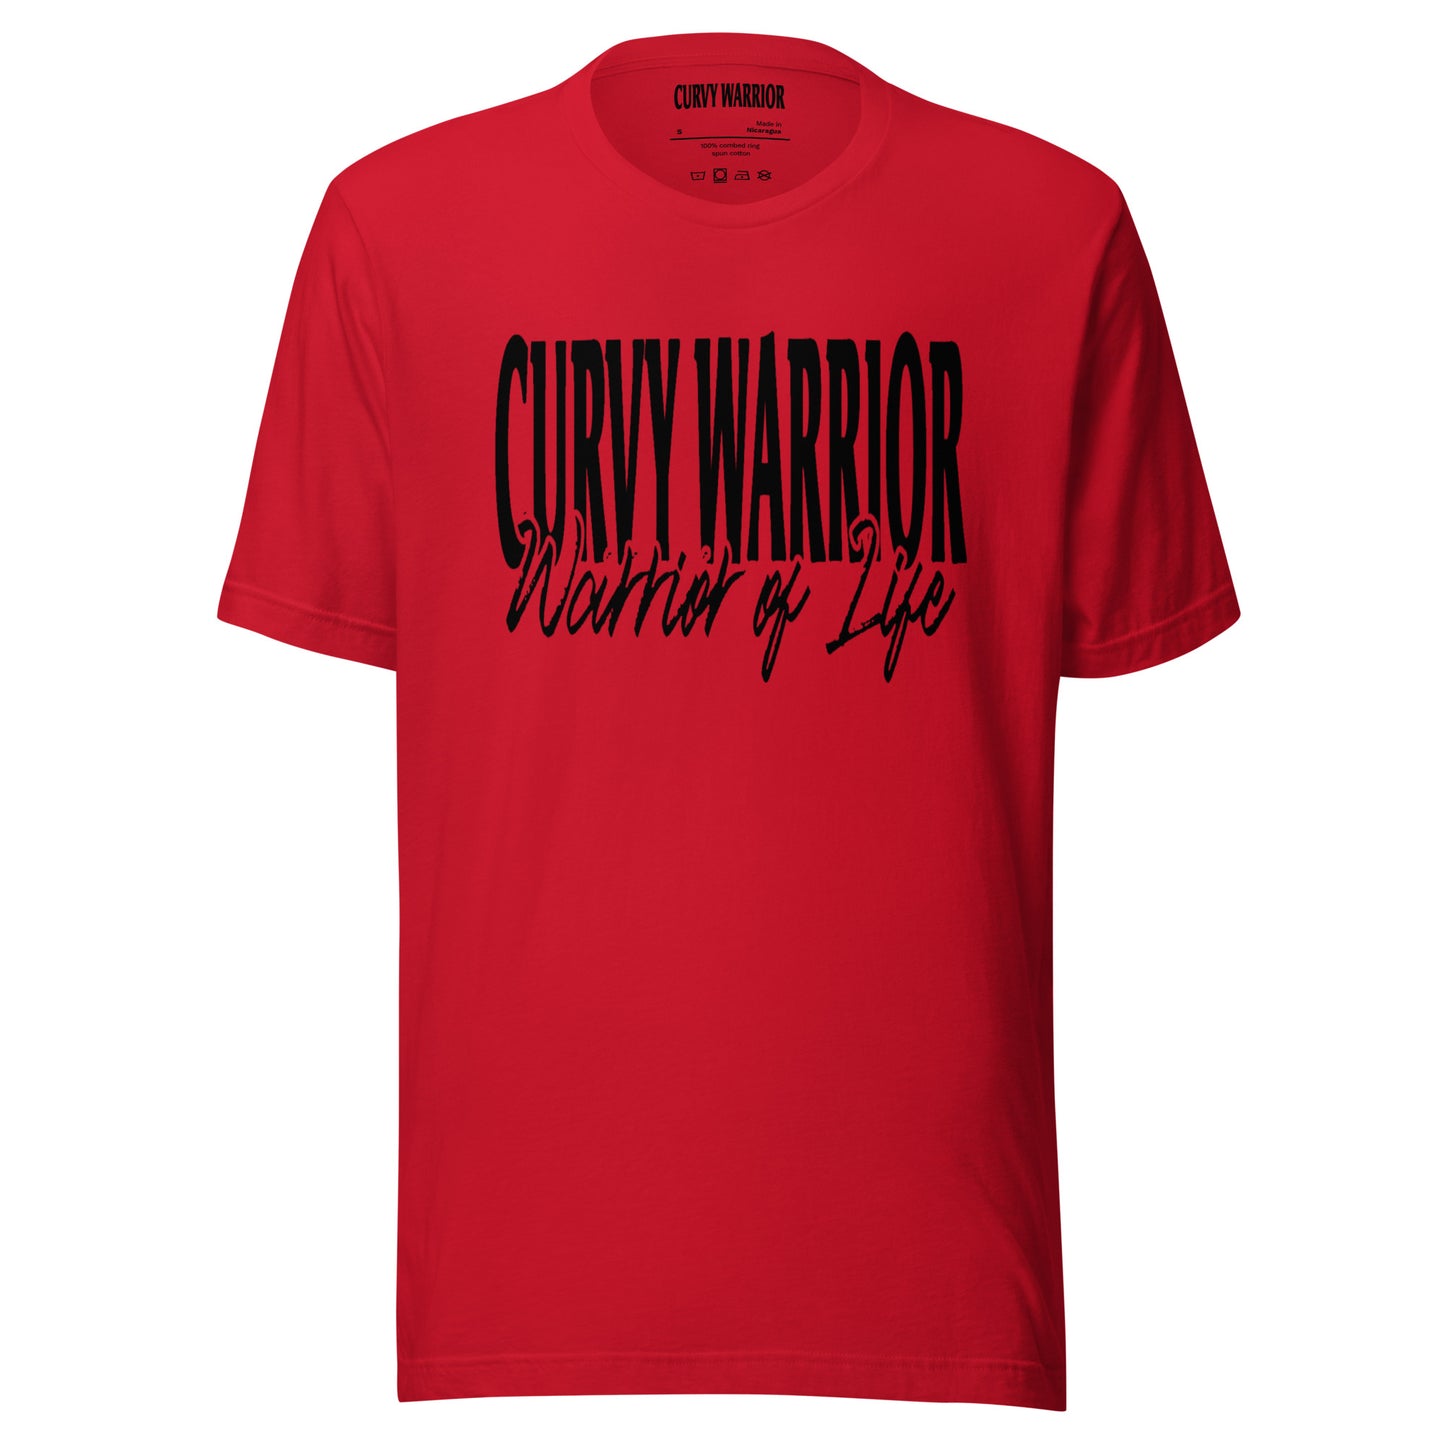 Curvy Warrior - Warrior of Life Unisex t-shirt